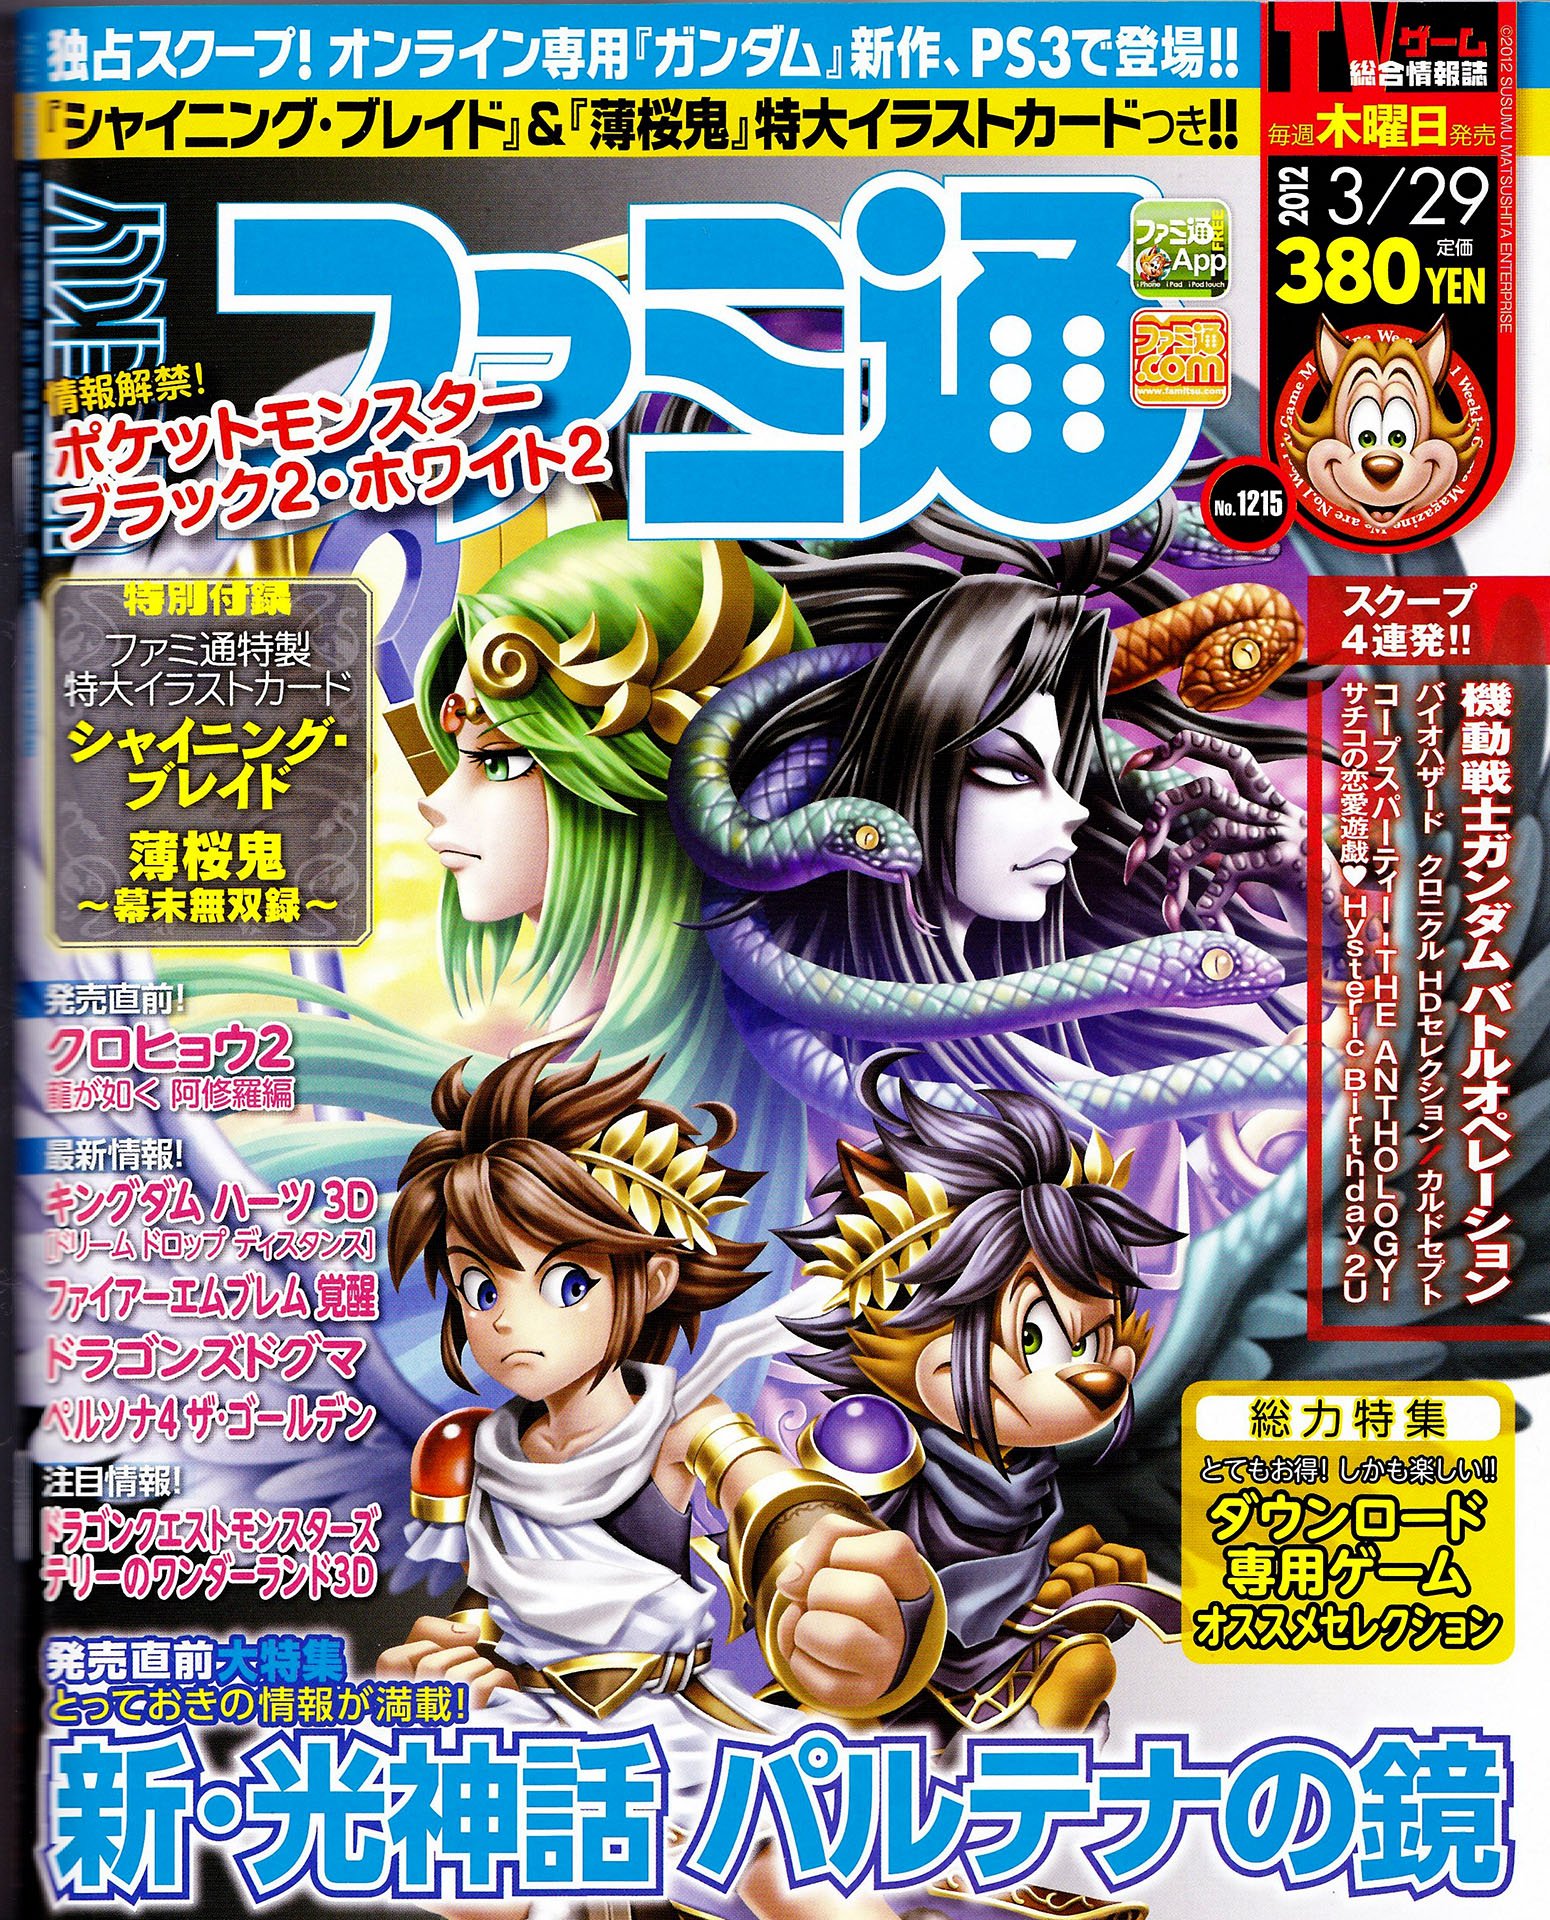 Famitsu 1215 (March 29, 2012)